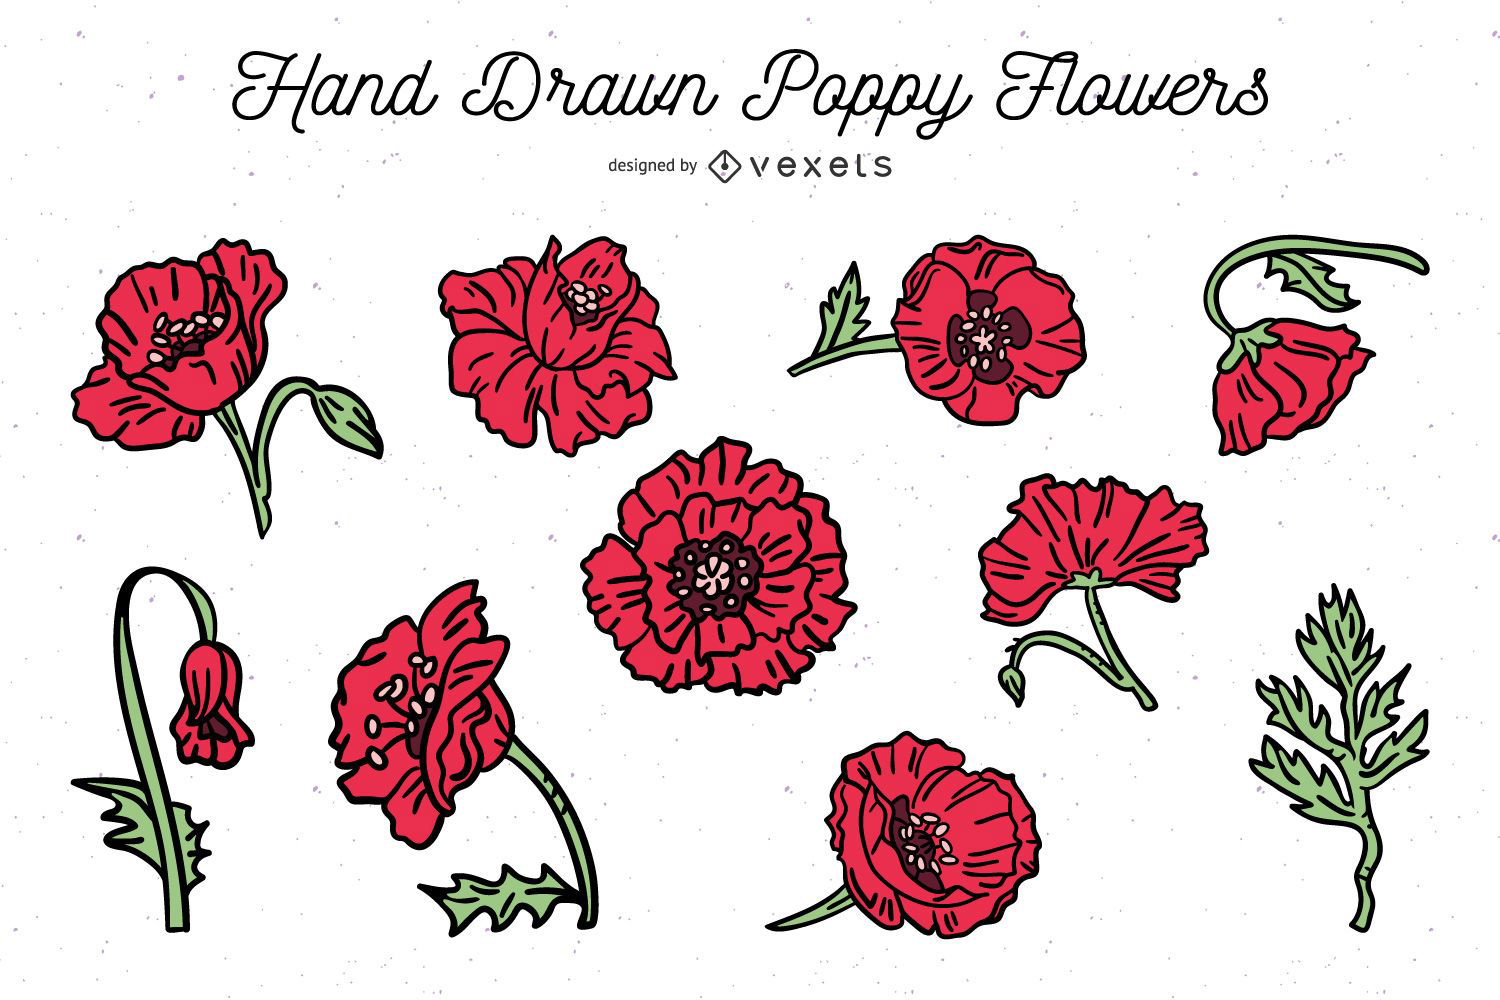 Hand Drawn Poppy Flower Pack